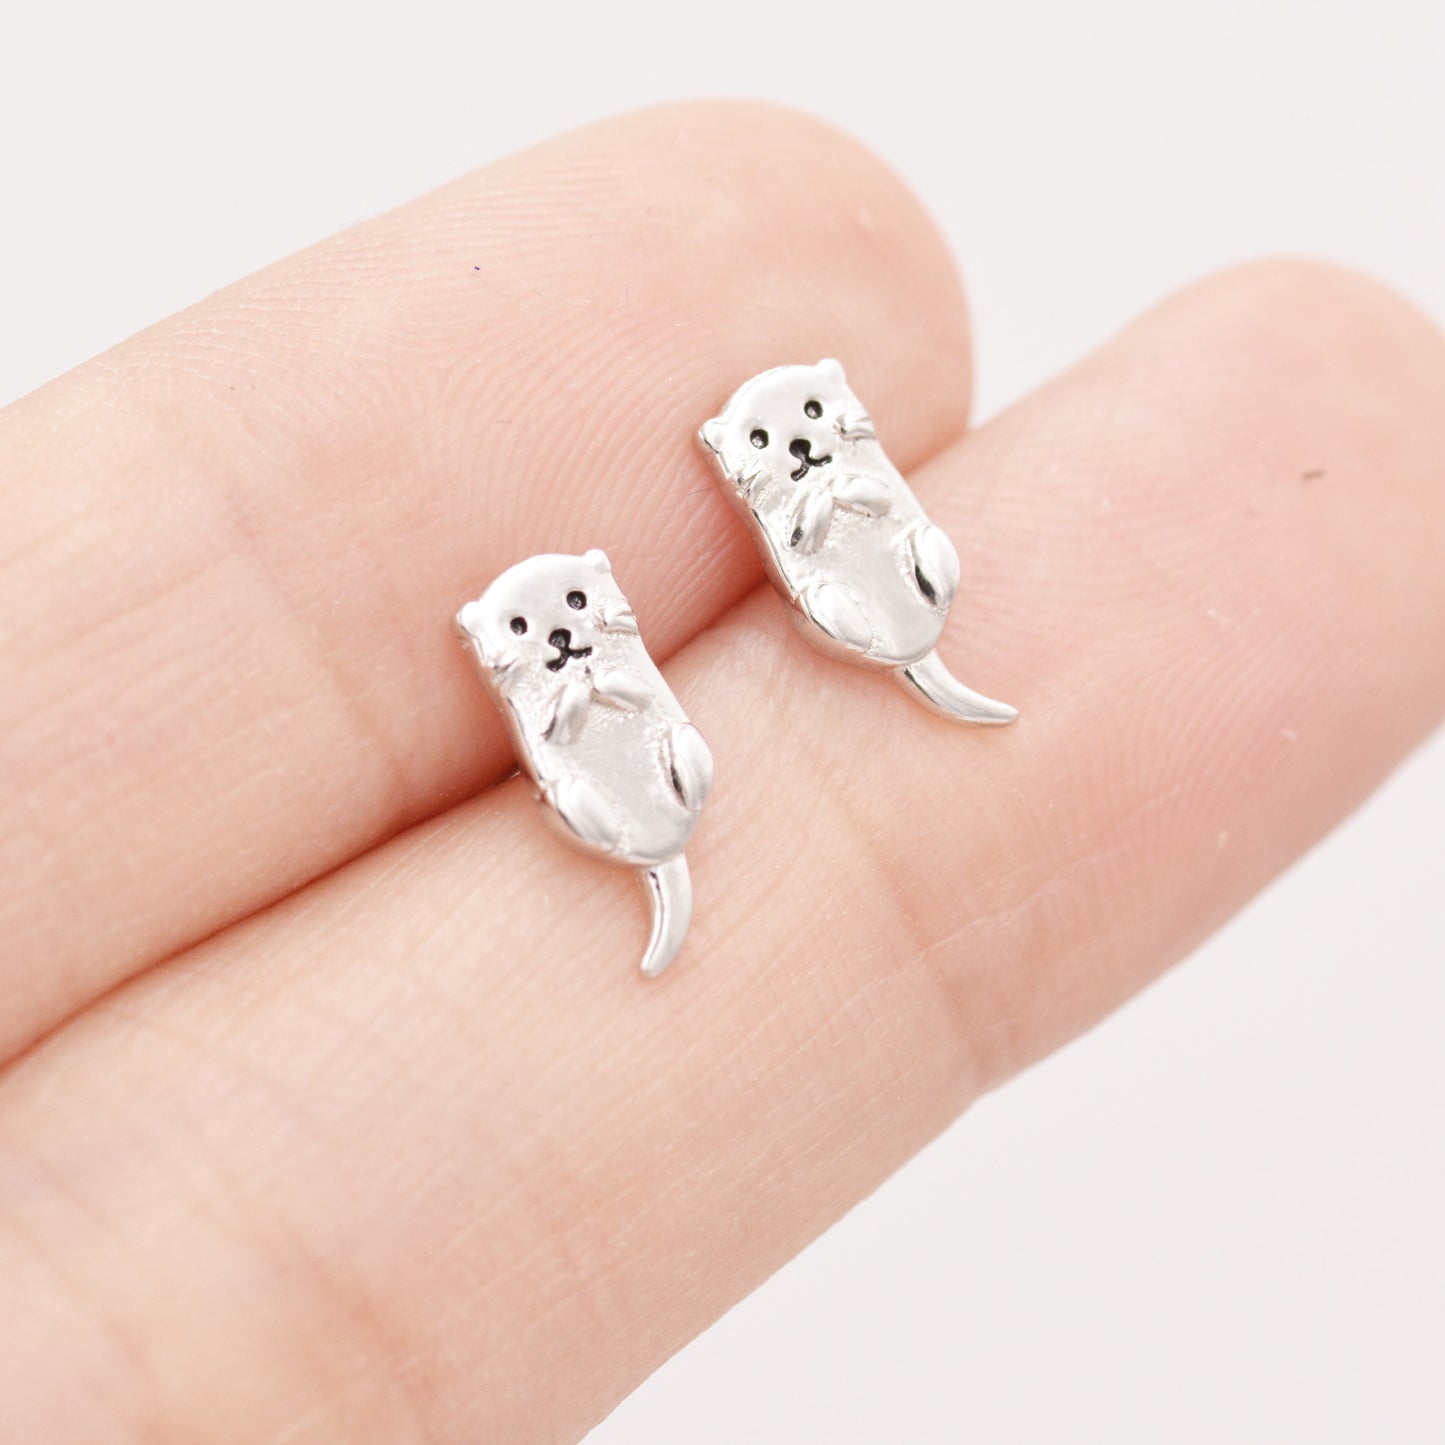 Otter Stud Earrings in Sterling Silver - Smiling Otter - Cute Animal Earrings -  Fun, Whimsical